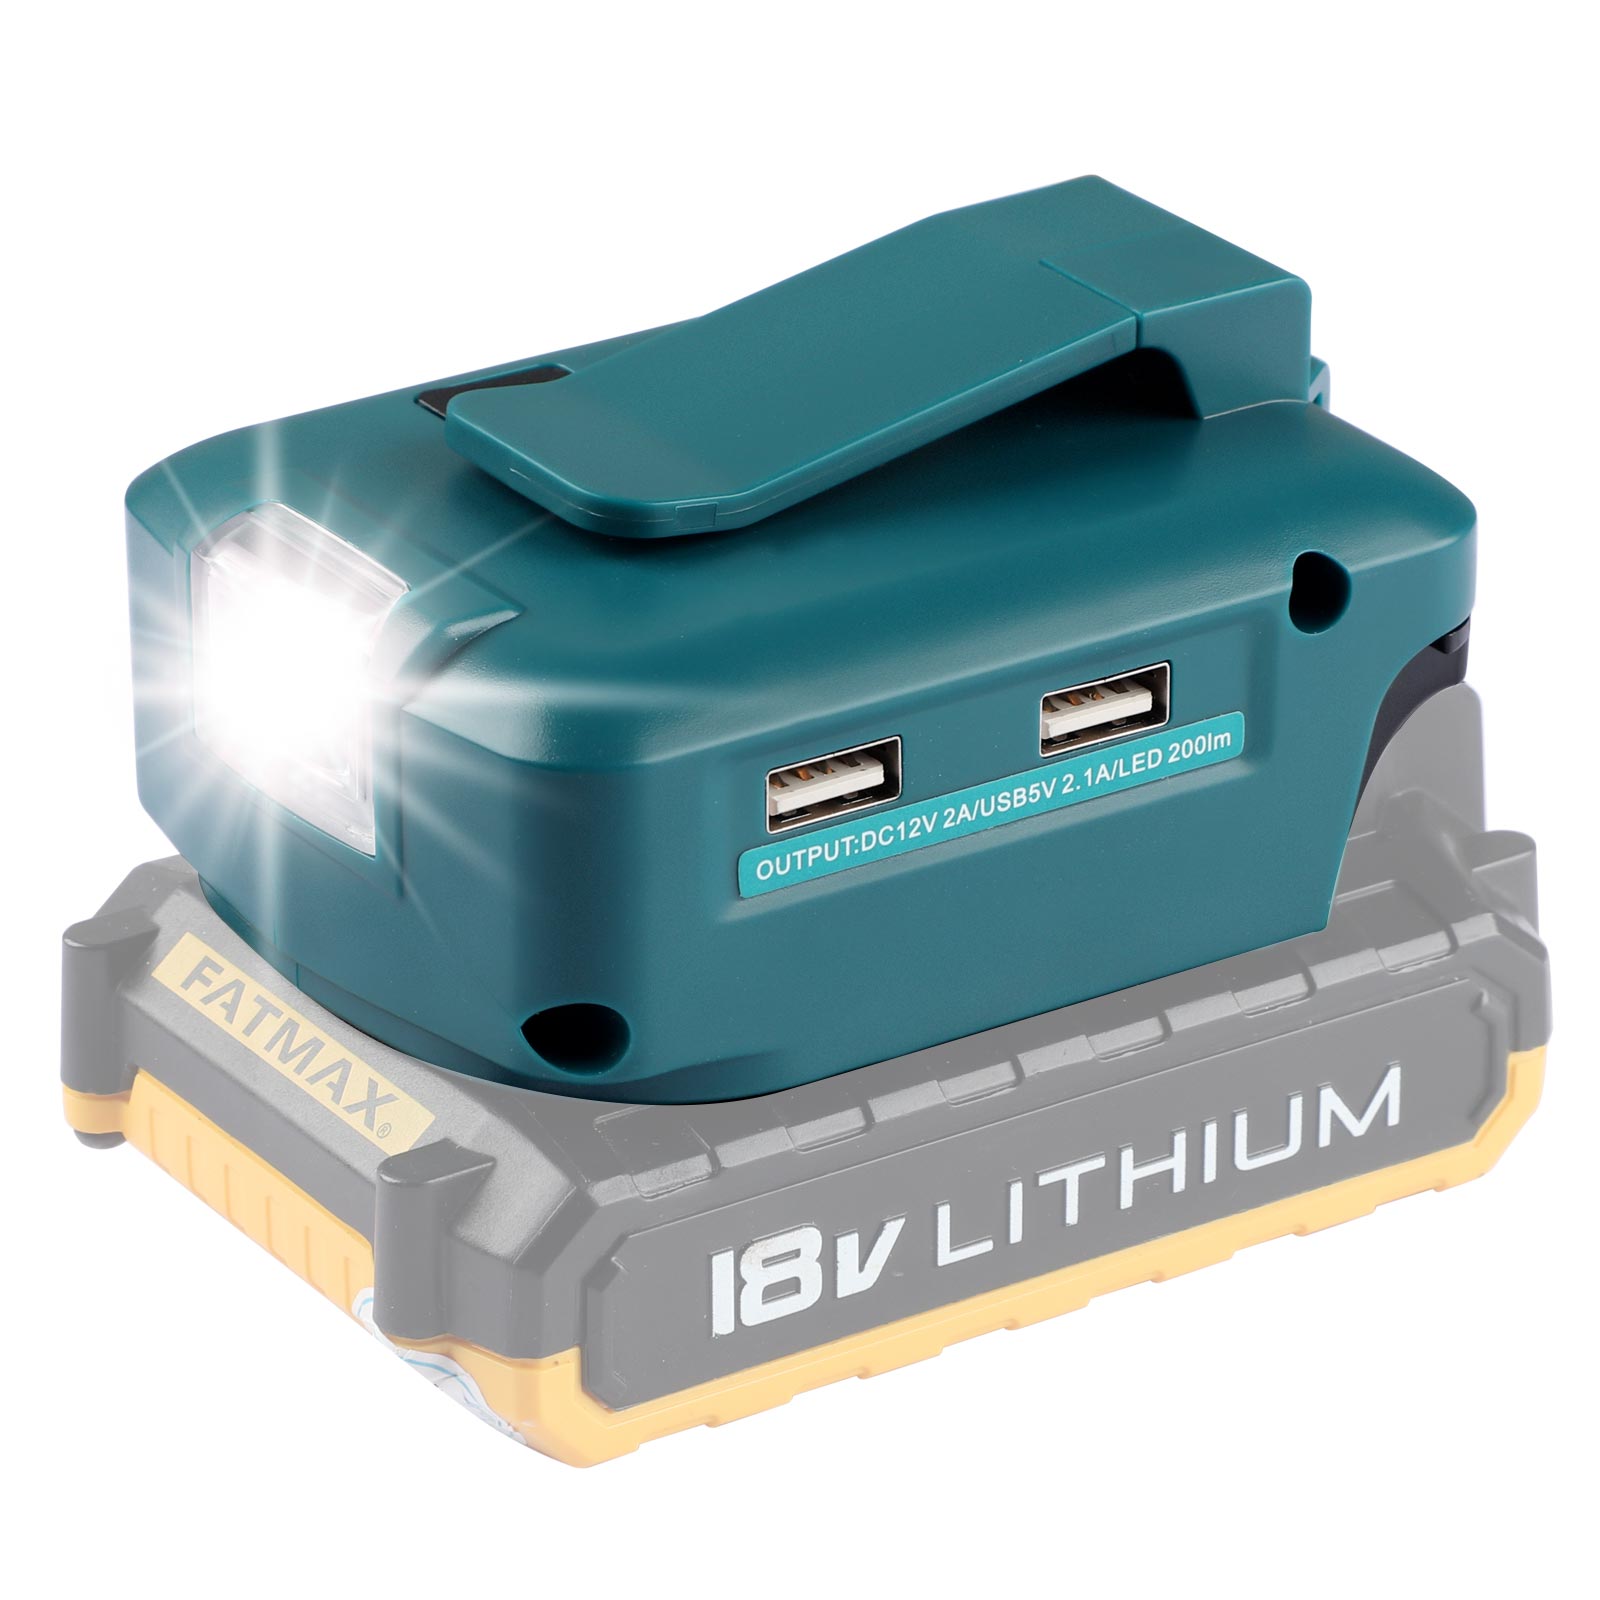 Urun Battery Adapter LED light with DC Port &2 USB Port for Black&Decker 14.4-18V Lithium Battery Power Source